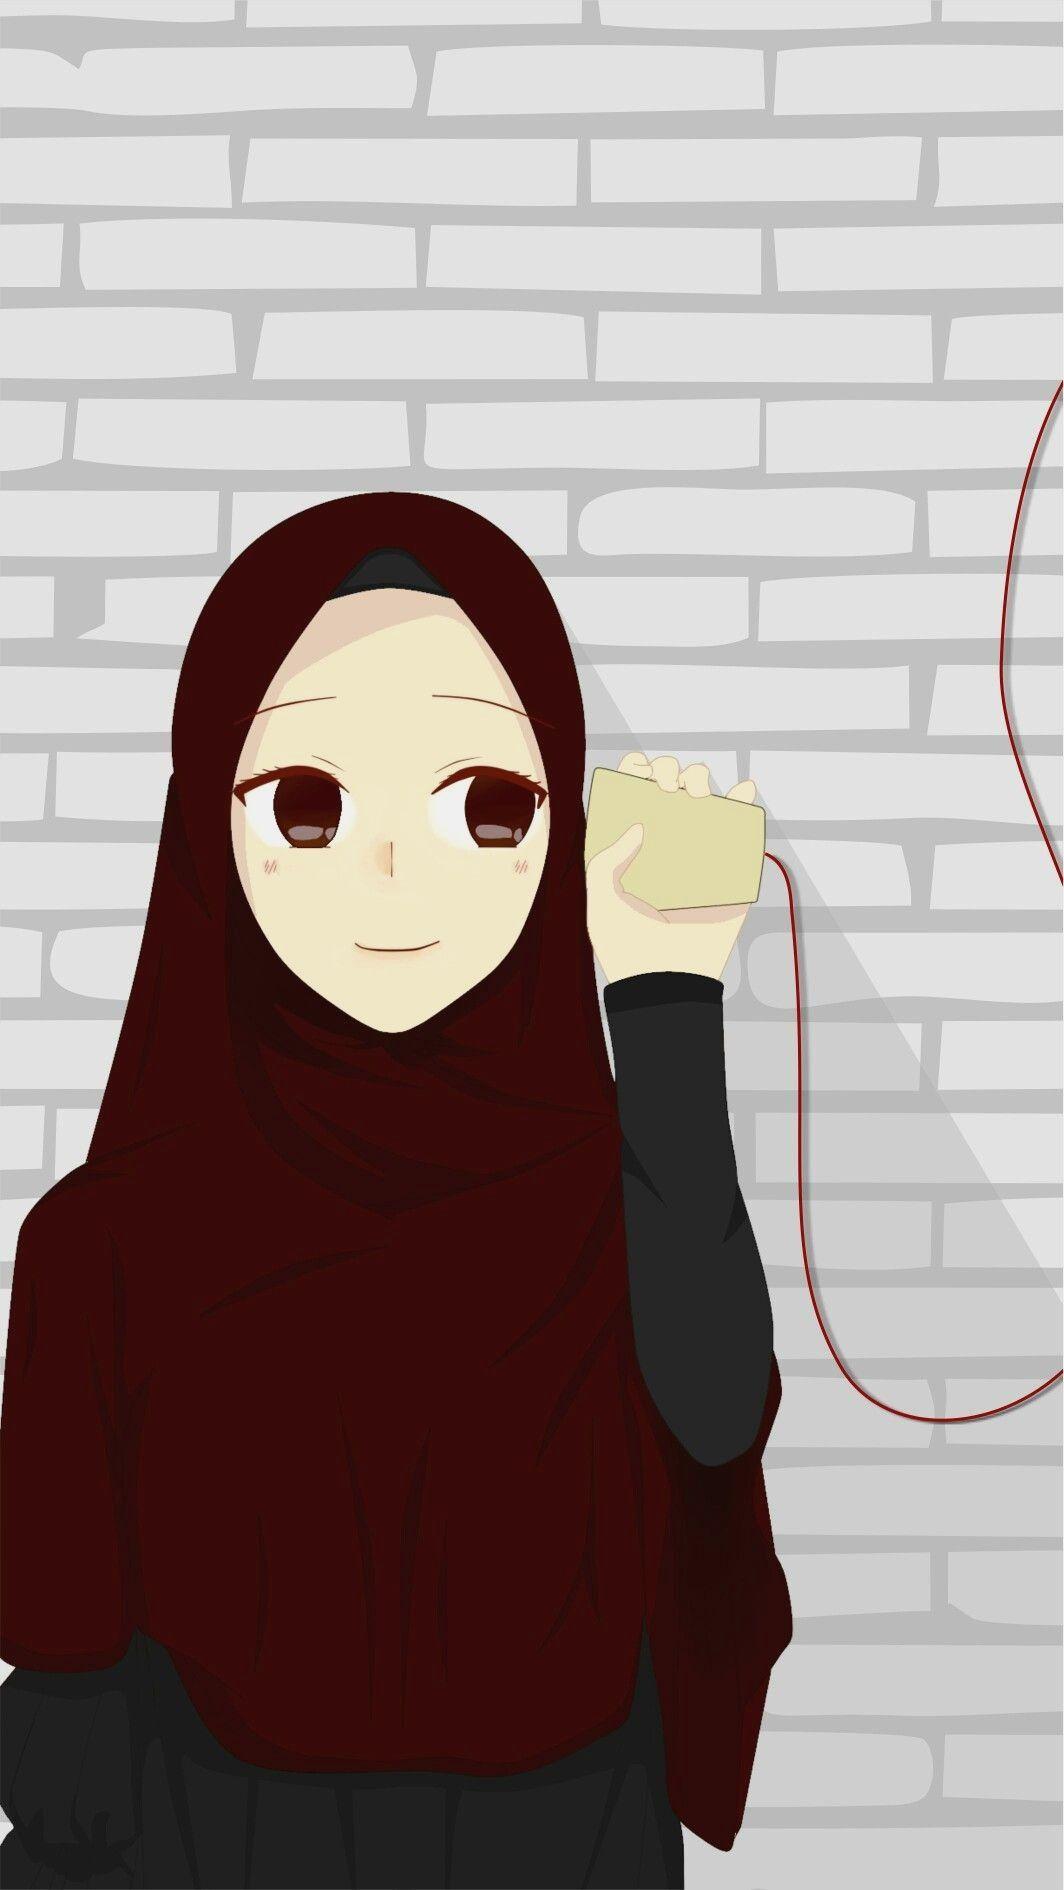 Muslim Girl Cartoon Wallpapers - Top Free Muslim Girl ...